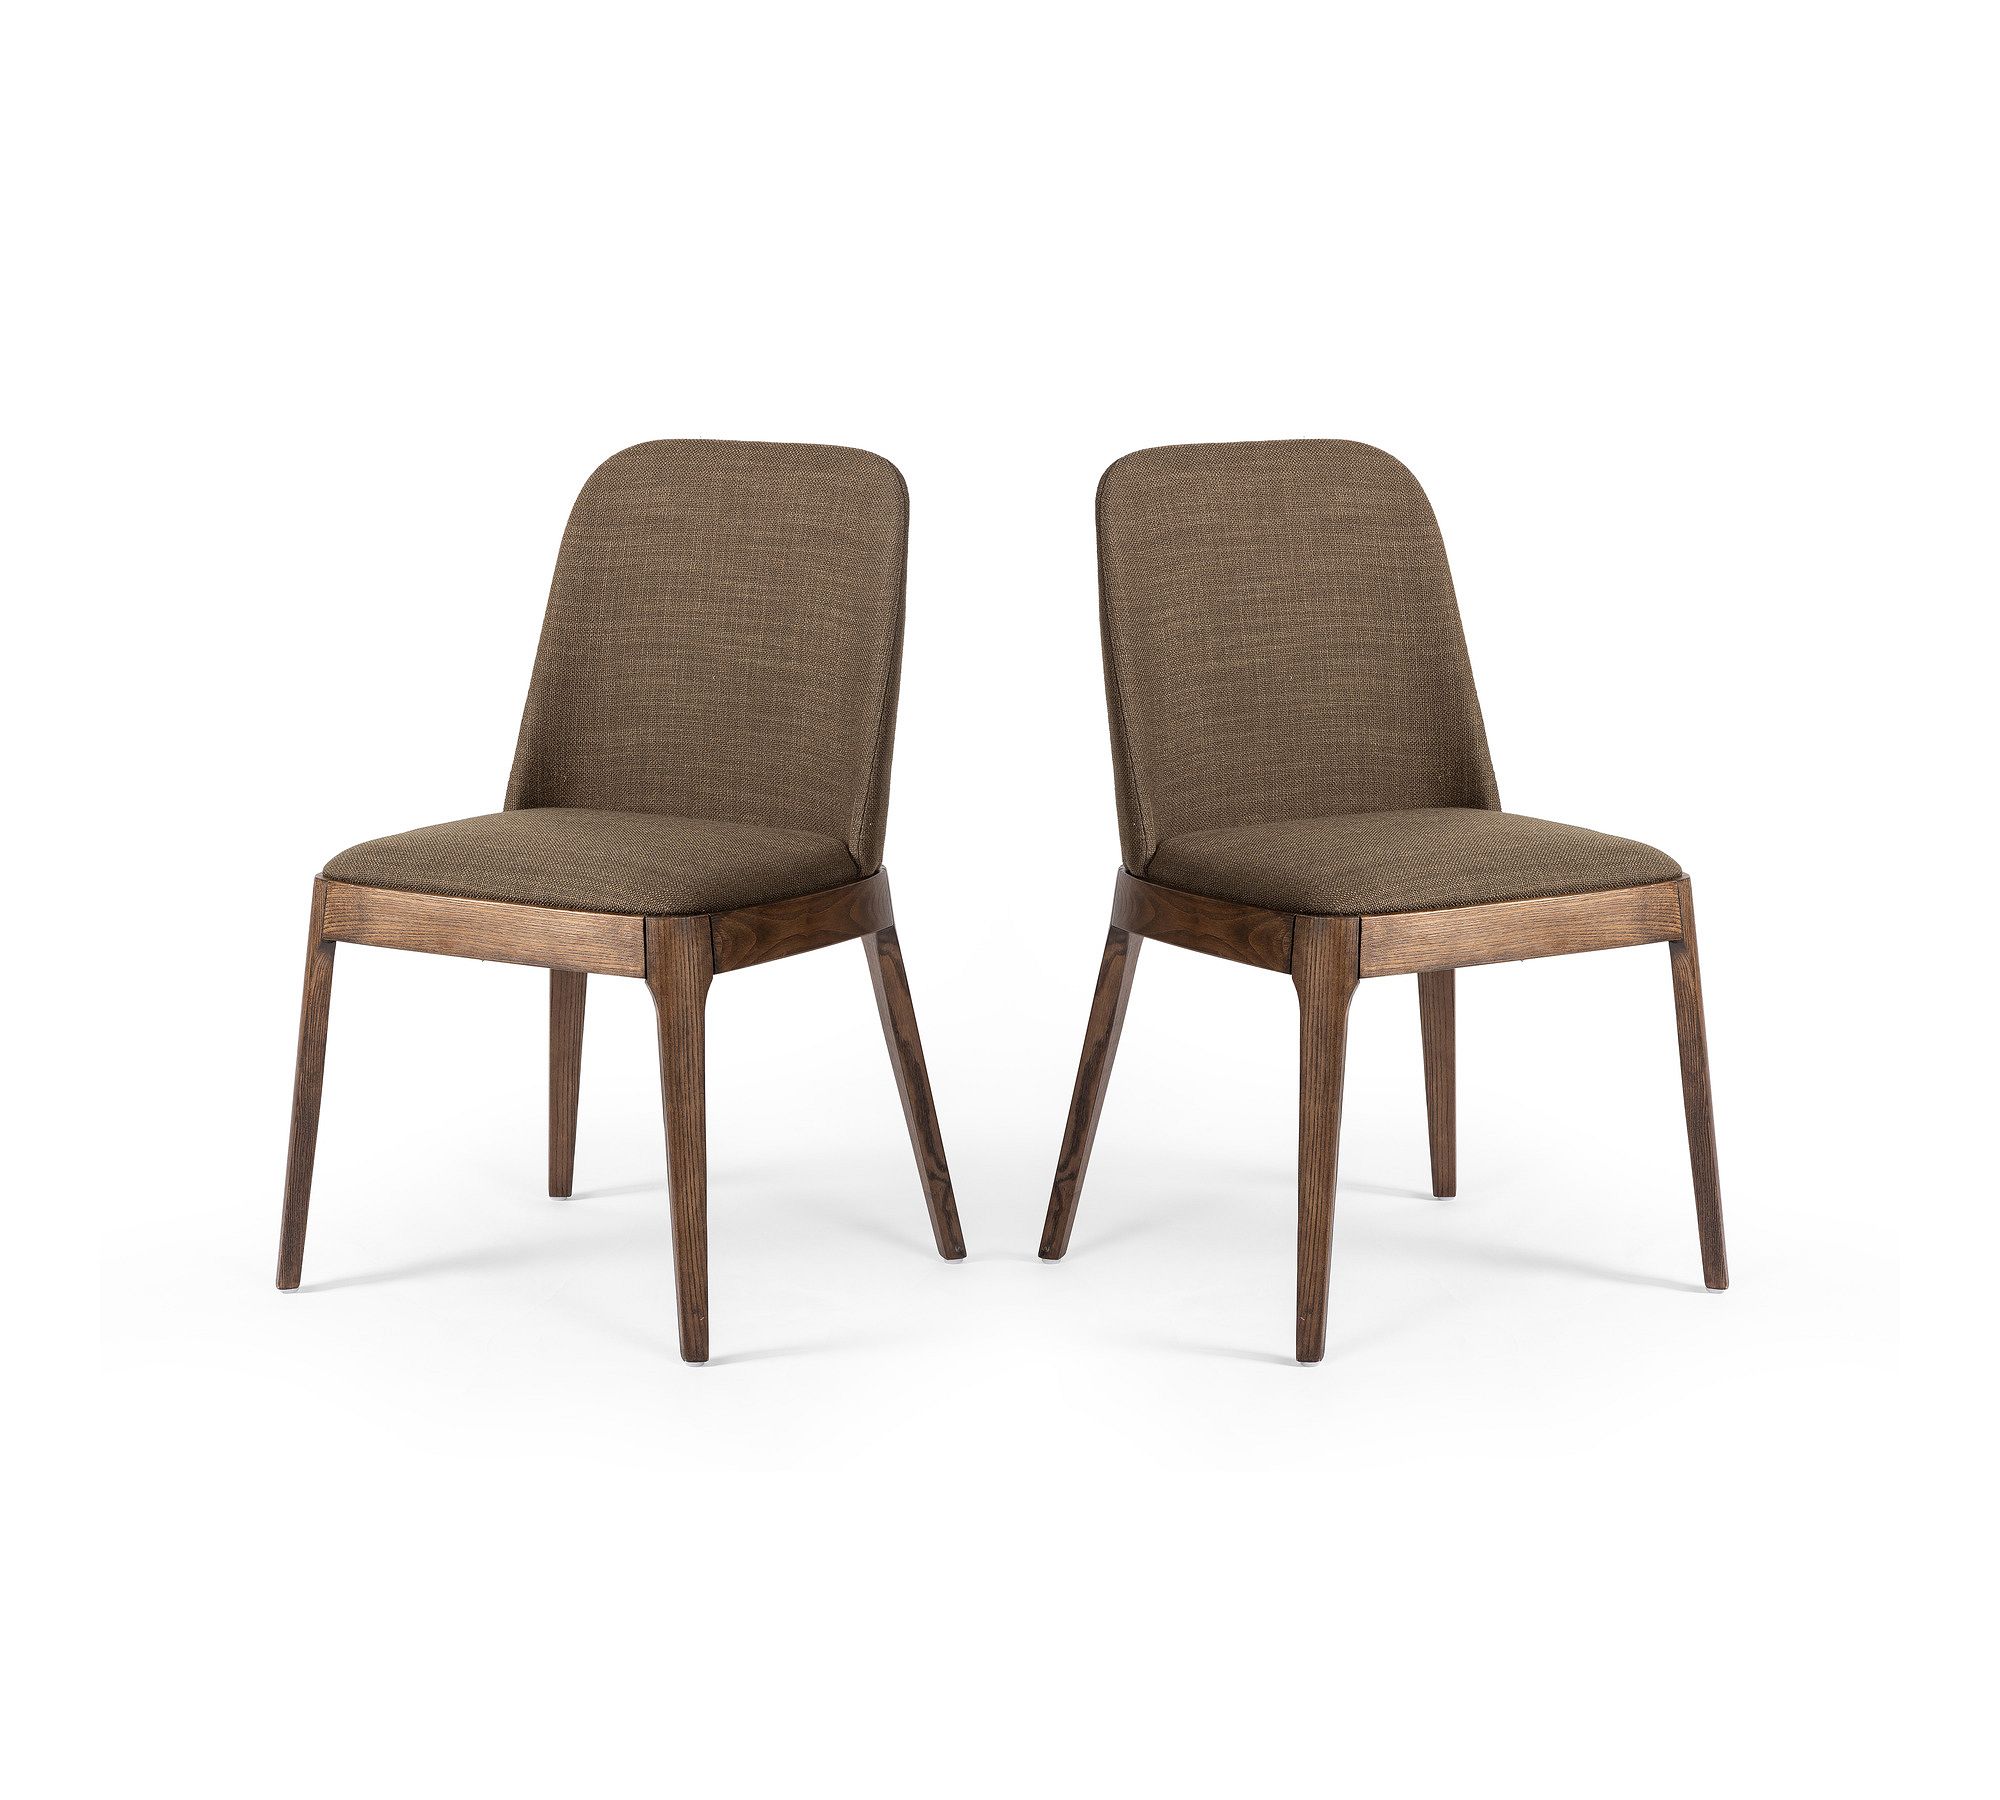 Raffertey Upholstered Dining Chairs - Set of 2